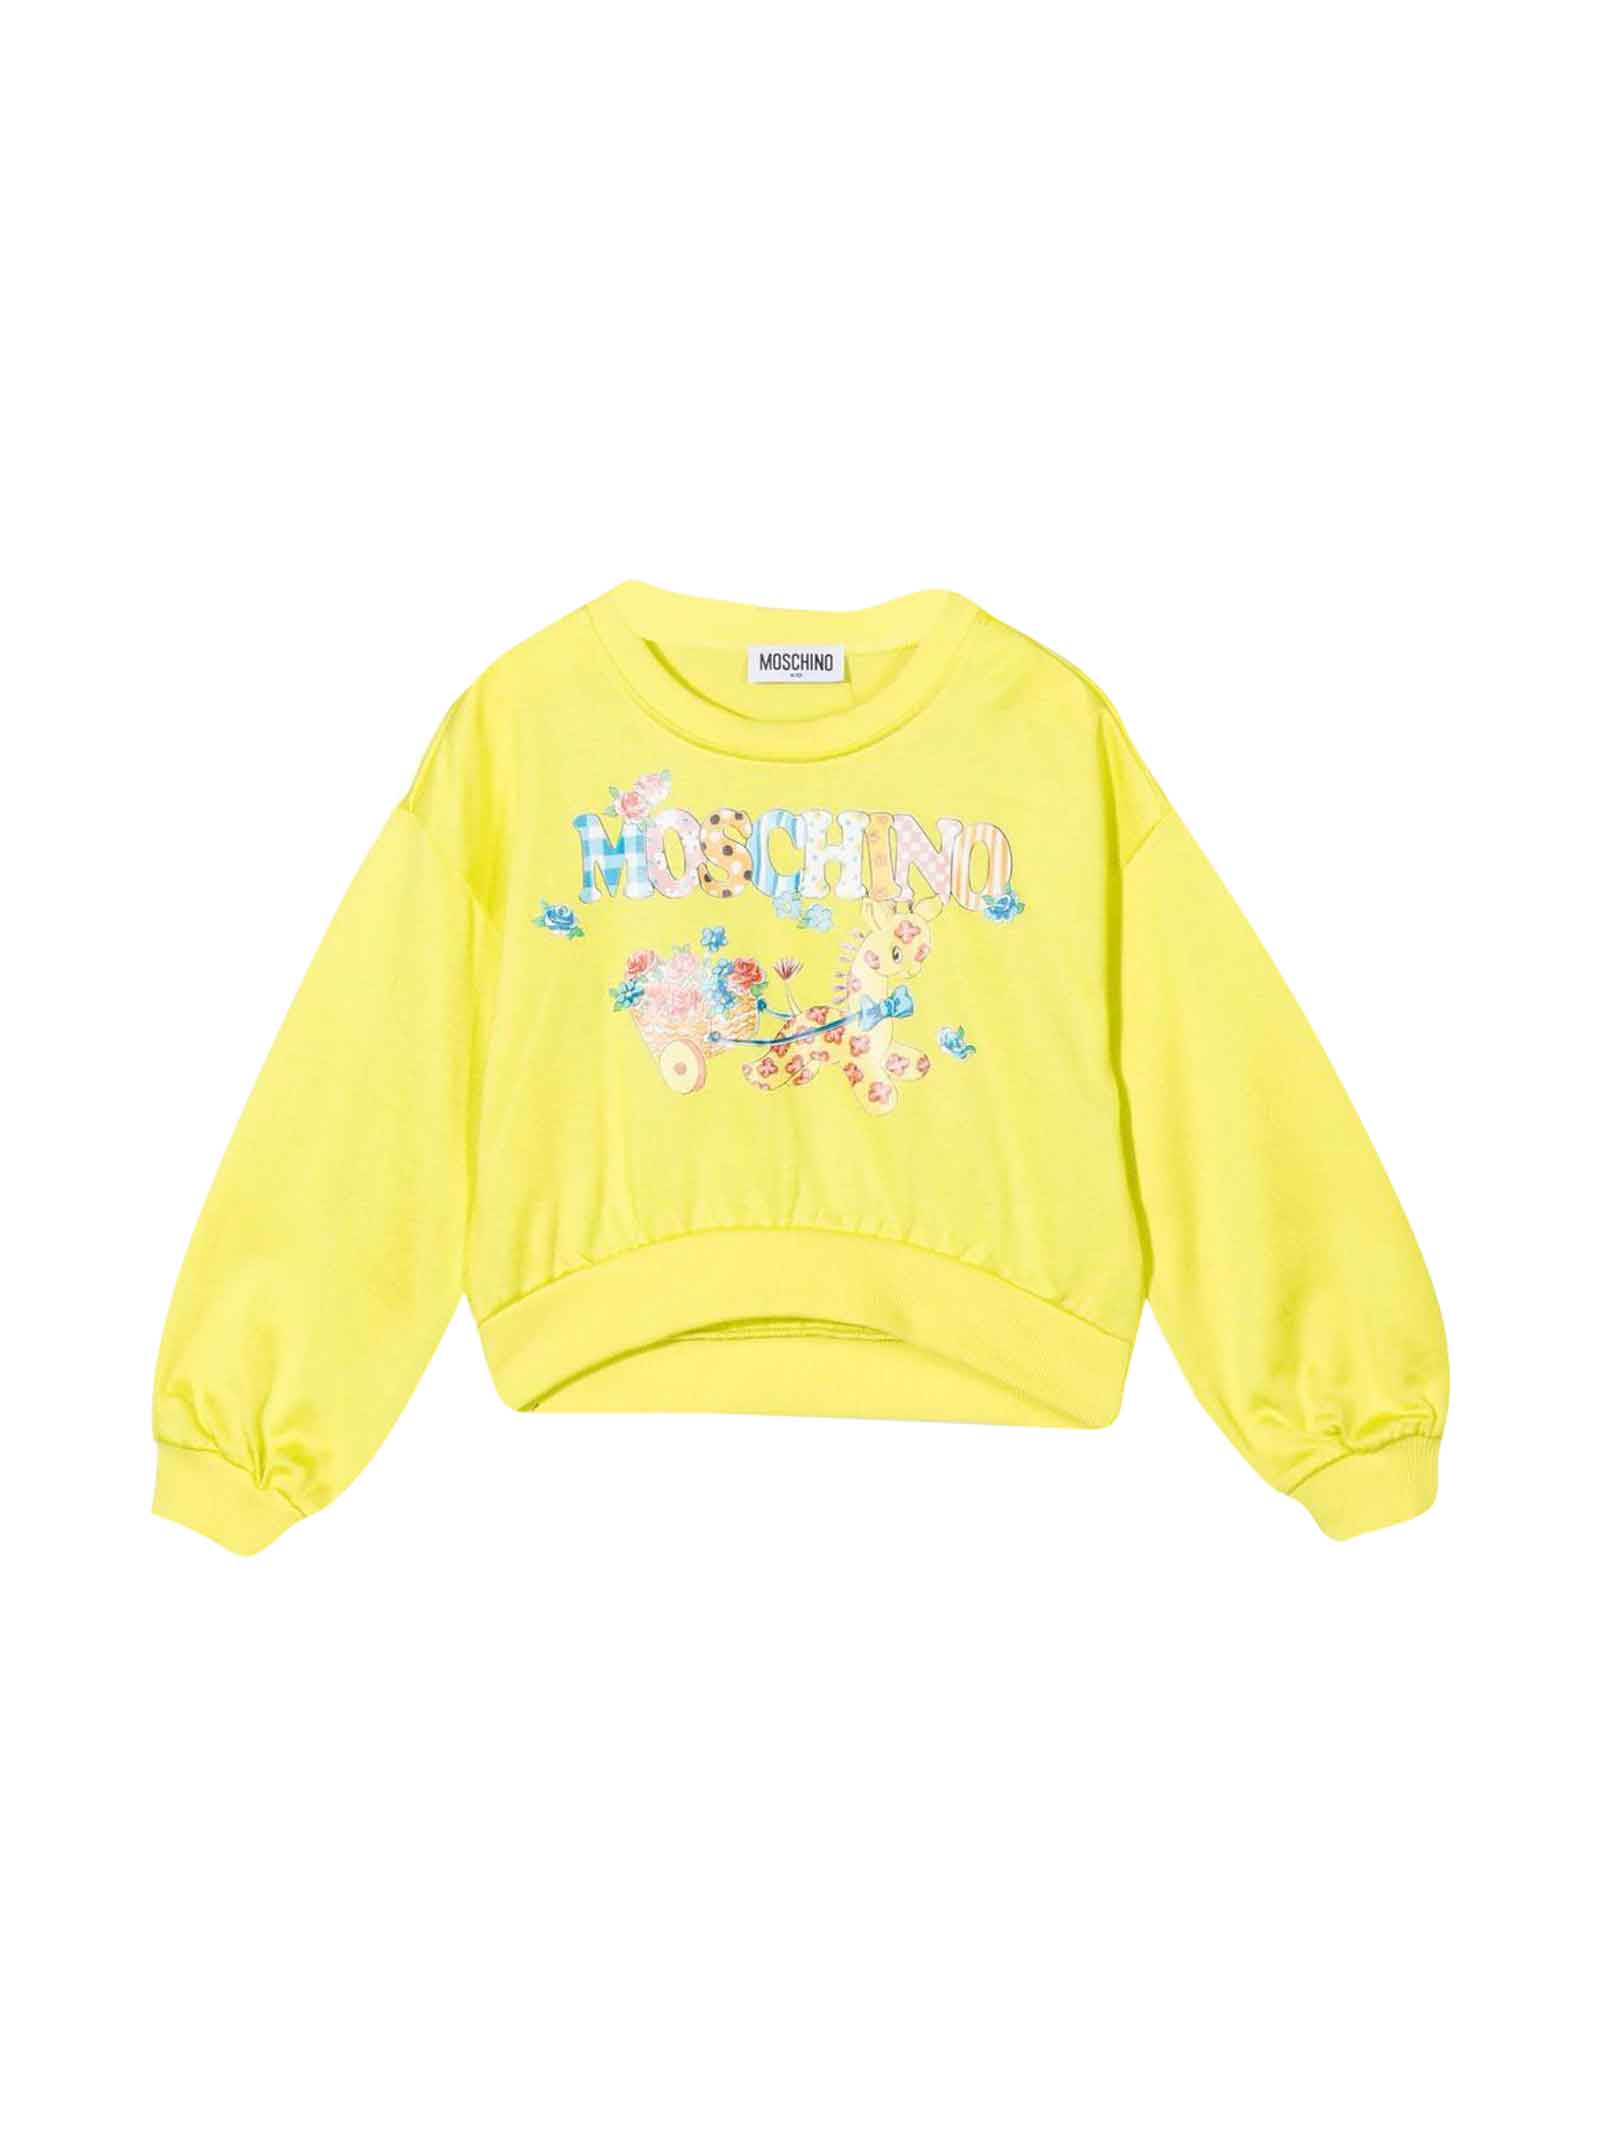 Moschino Girl Yellow Sweatshirt